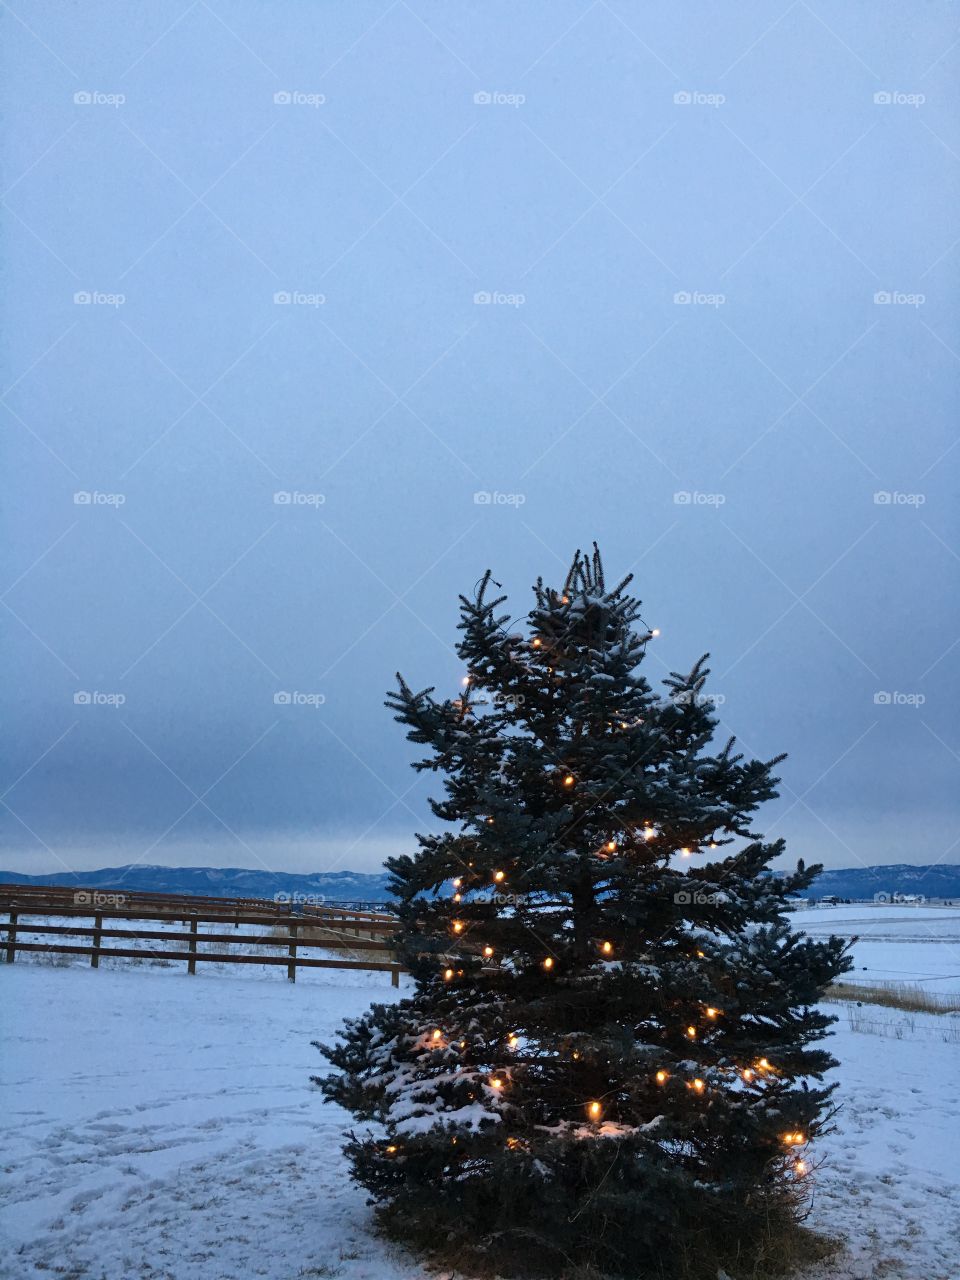 Outdoor Christmas tree.